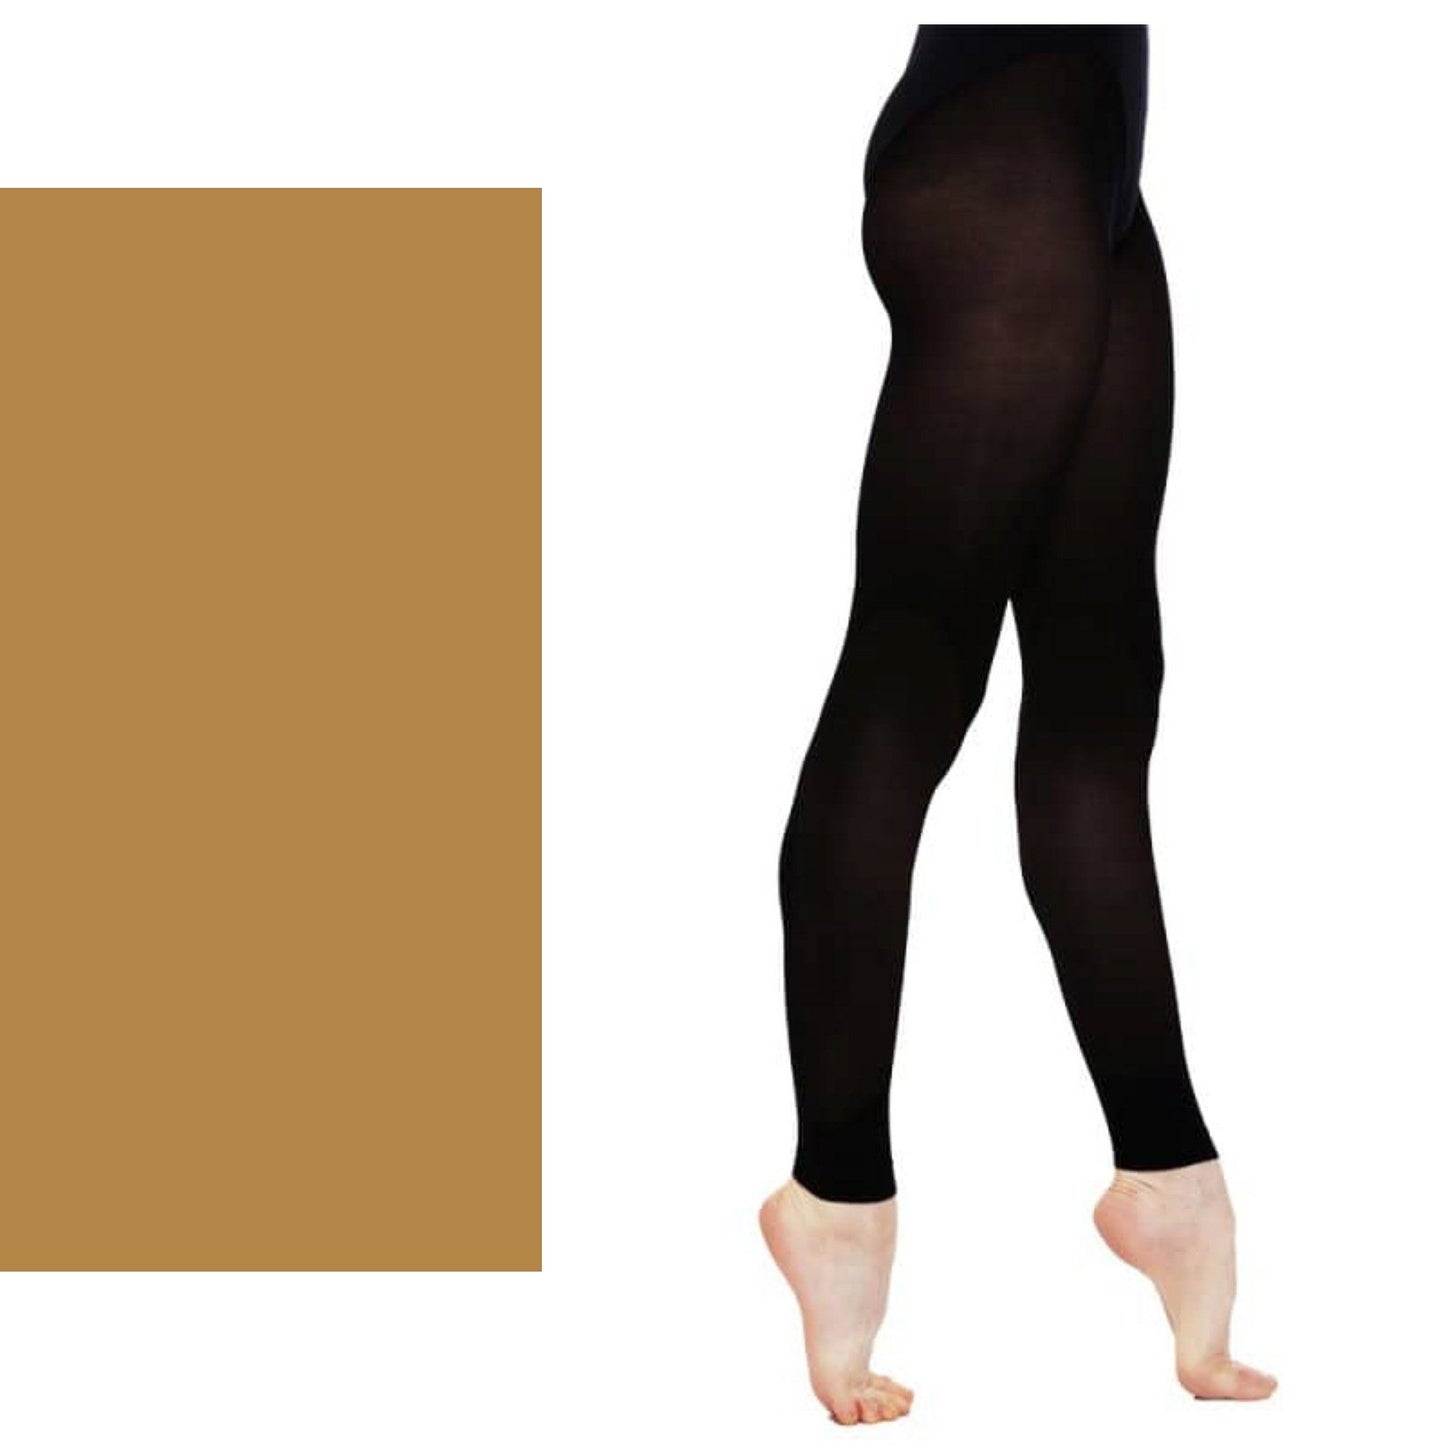 Silky Dance Footless Tights Dancewear at Wholesale Prices - Legwear  International